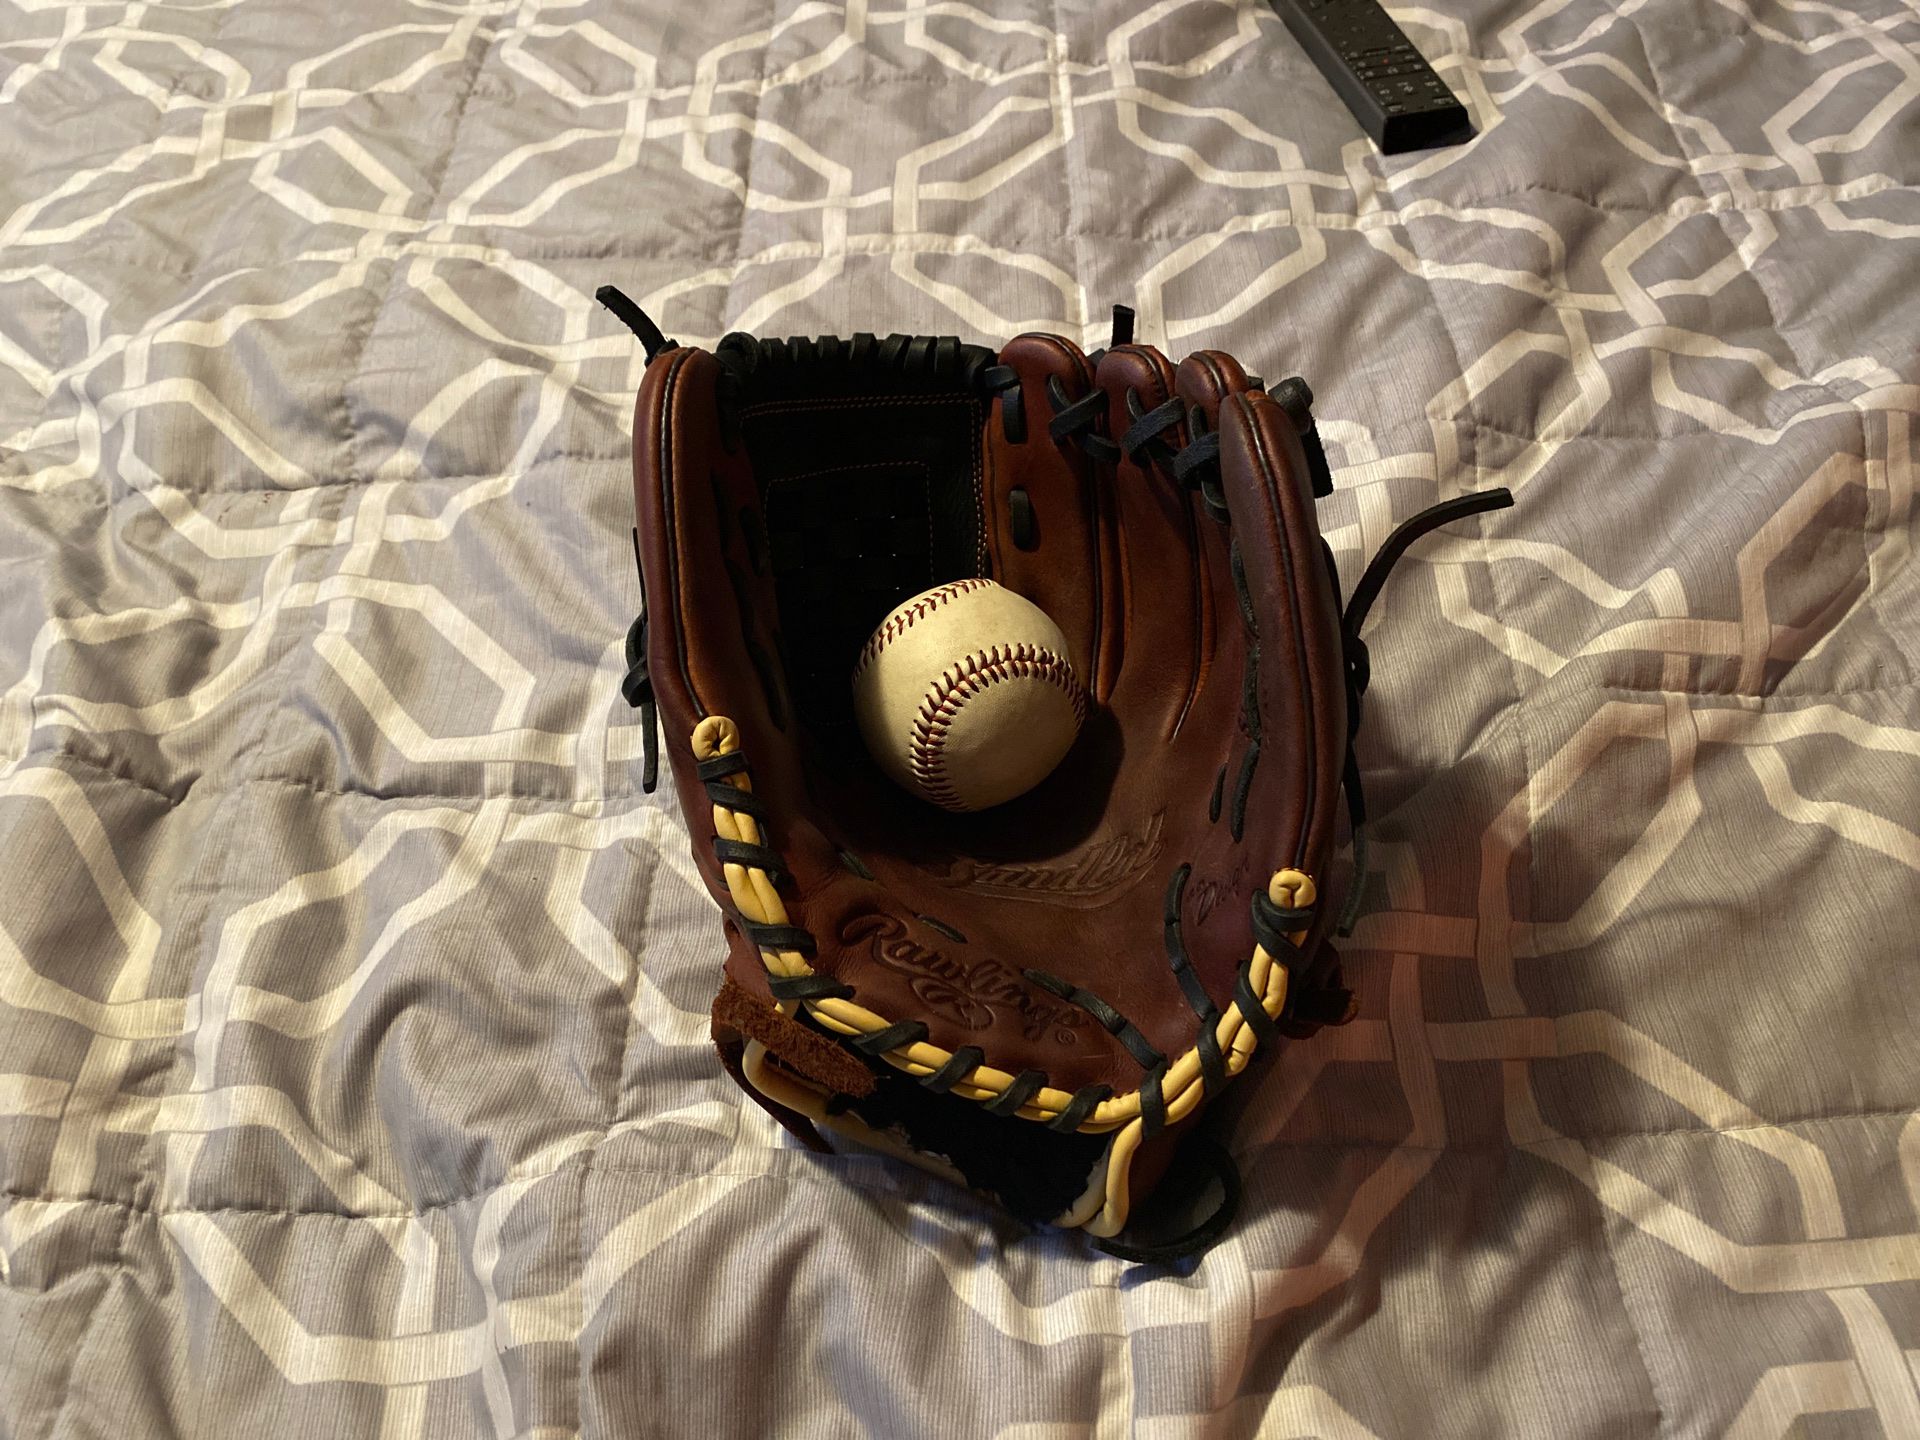 Rawlings 12” Sandlot baseball glove